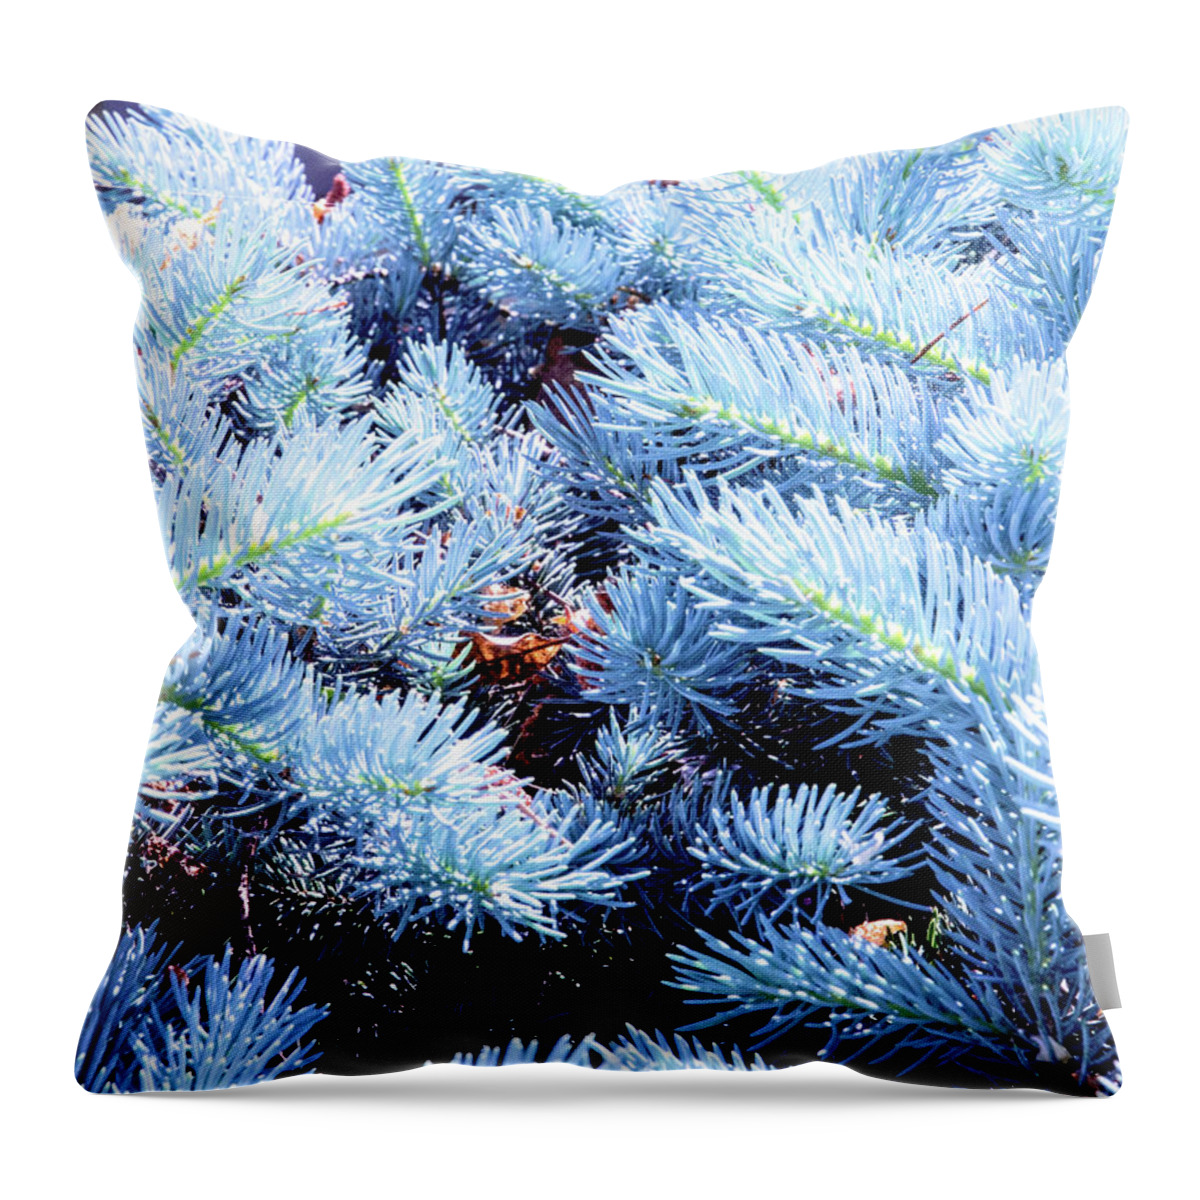 Art Throw Pillow featuring the photograph Blue Pine Needles by David Desautel